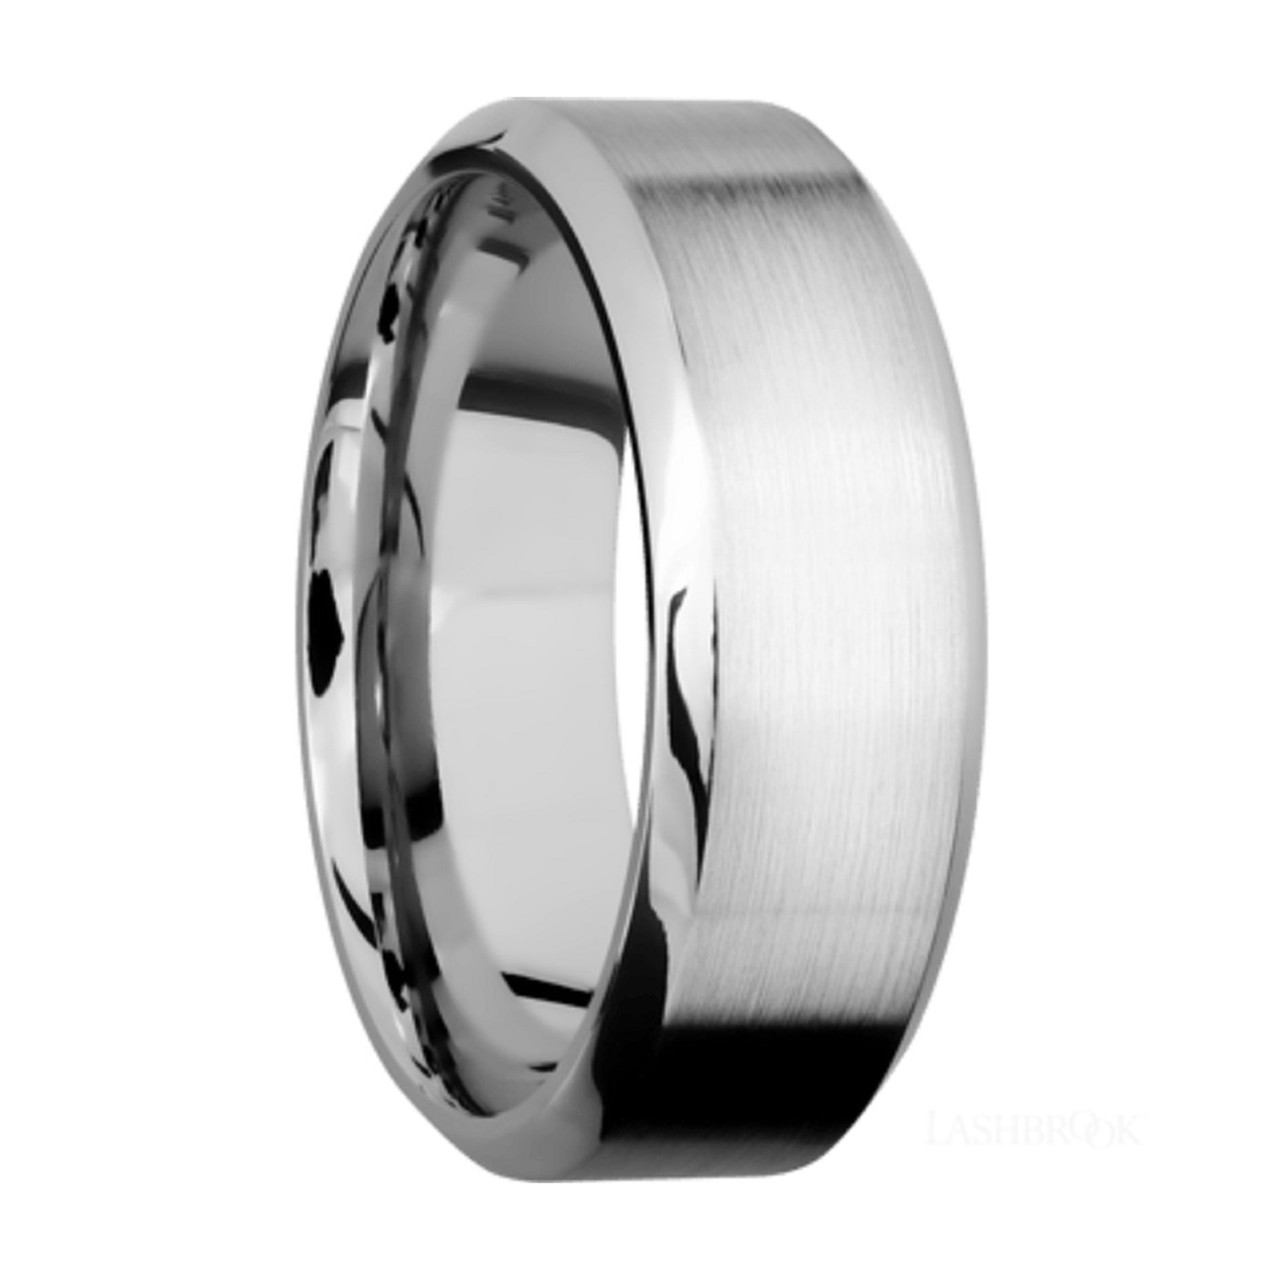 Cobalt Chrome High Beveled Ring By Lashbrook Designs - Rings